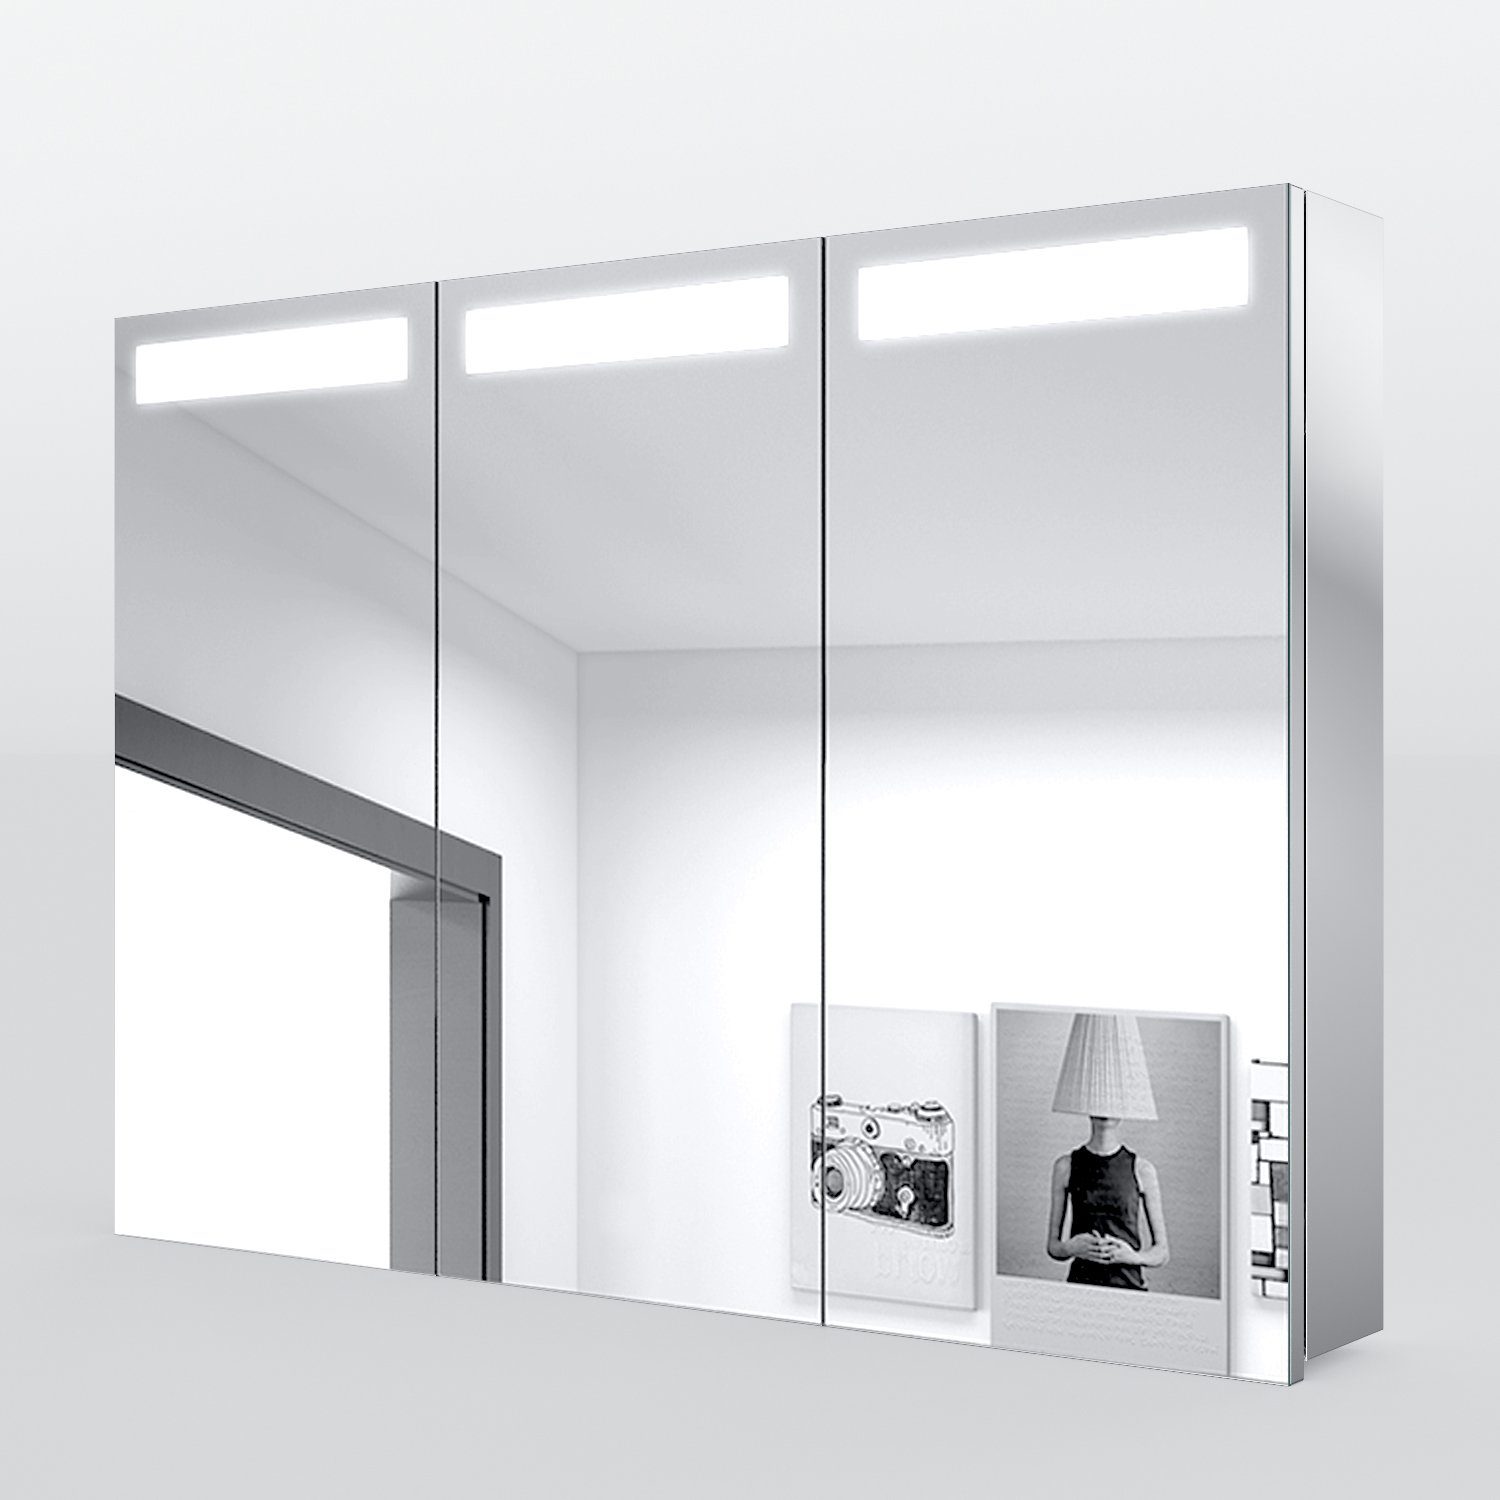 LED Badezimmerspiegelschrank SONNI Edelstahl Bad Beleuchtung Badezimmerspiegelschrank Spiegelschrank mit 90x65x13cm 3-türig